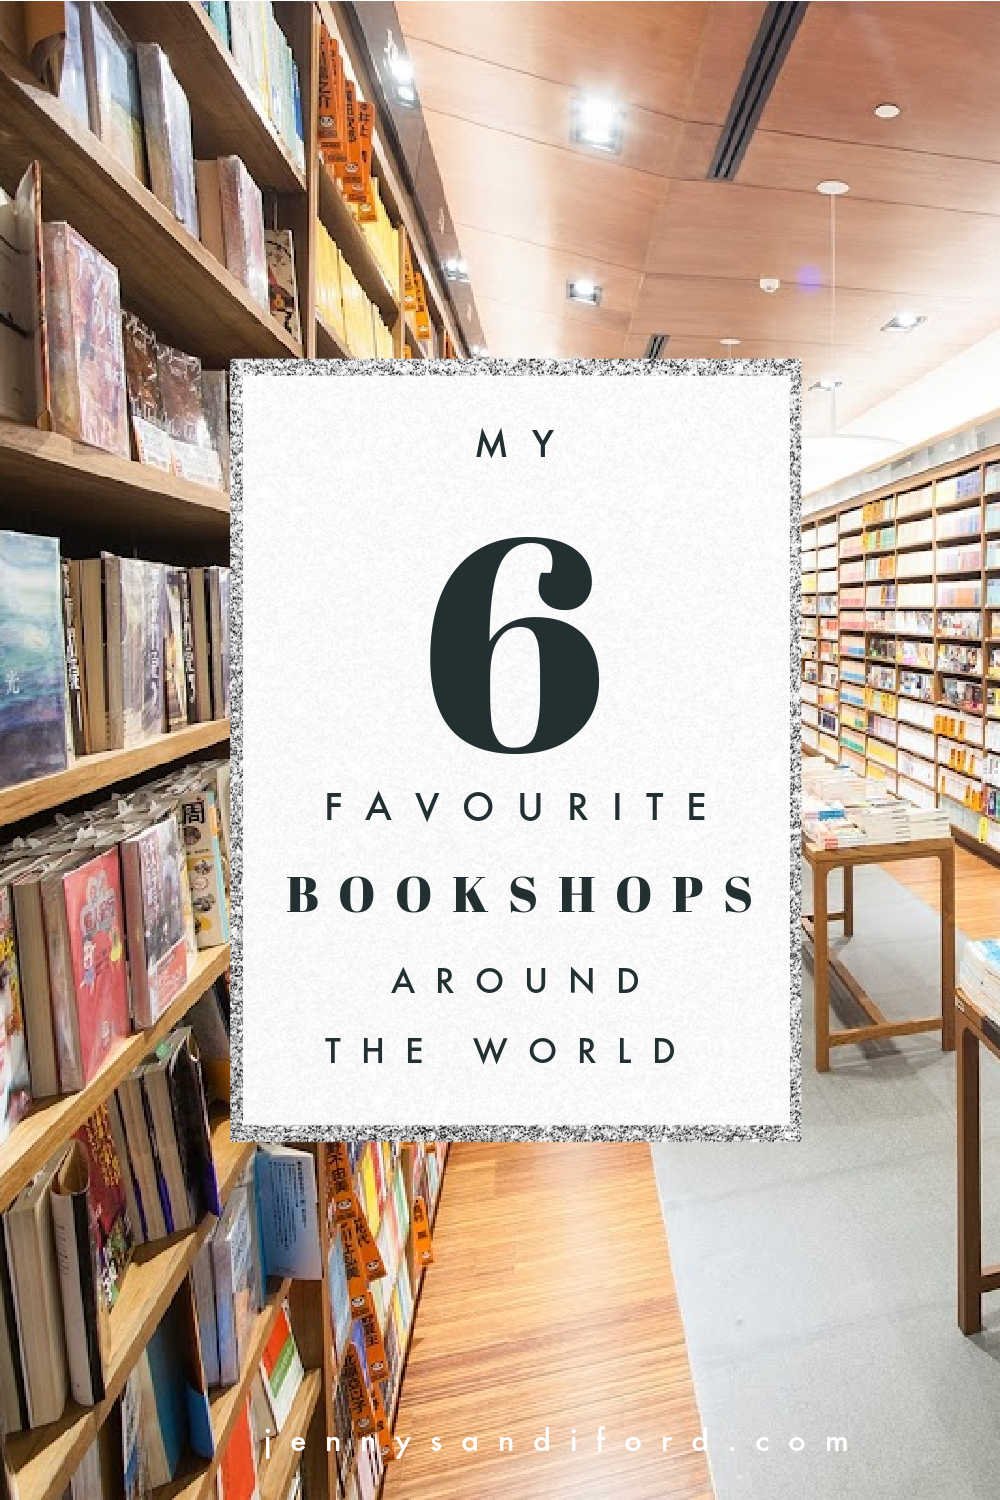 My 6 Favourite Bookshops Around the World! — Jenny Sandiford